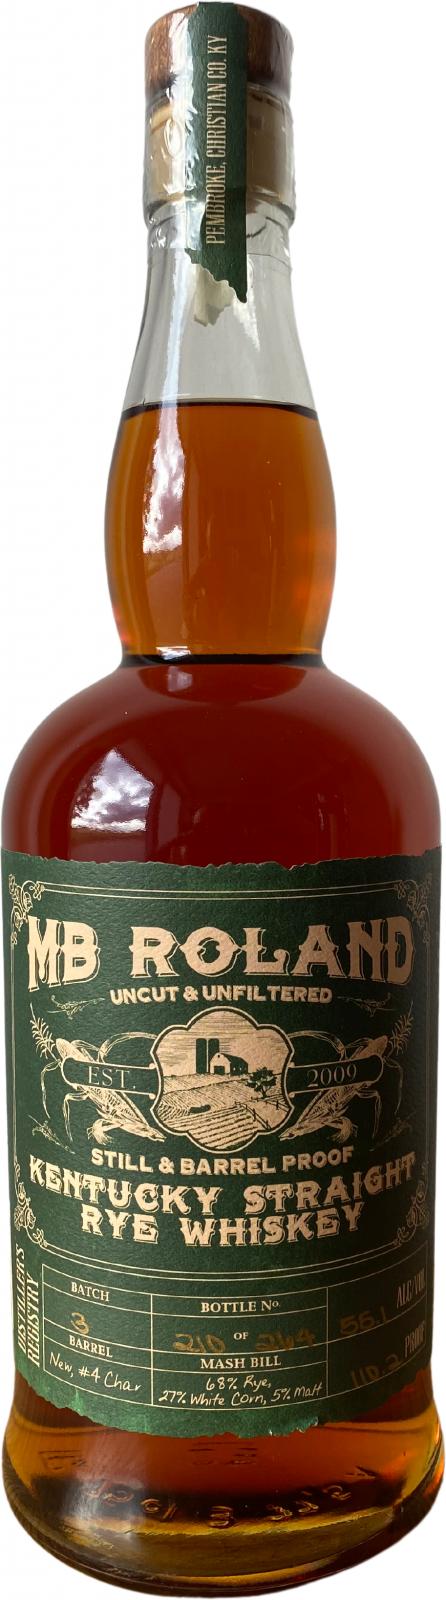 Mb Roland Kentucky Straight Rye Whisky New #4 Char Batch 3 55.1% 750ml